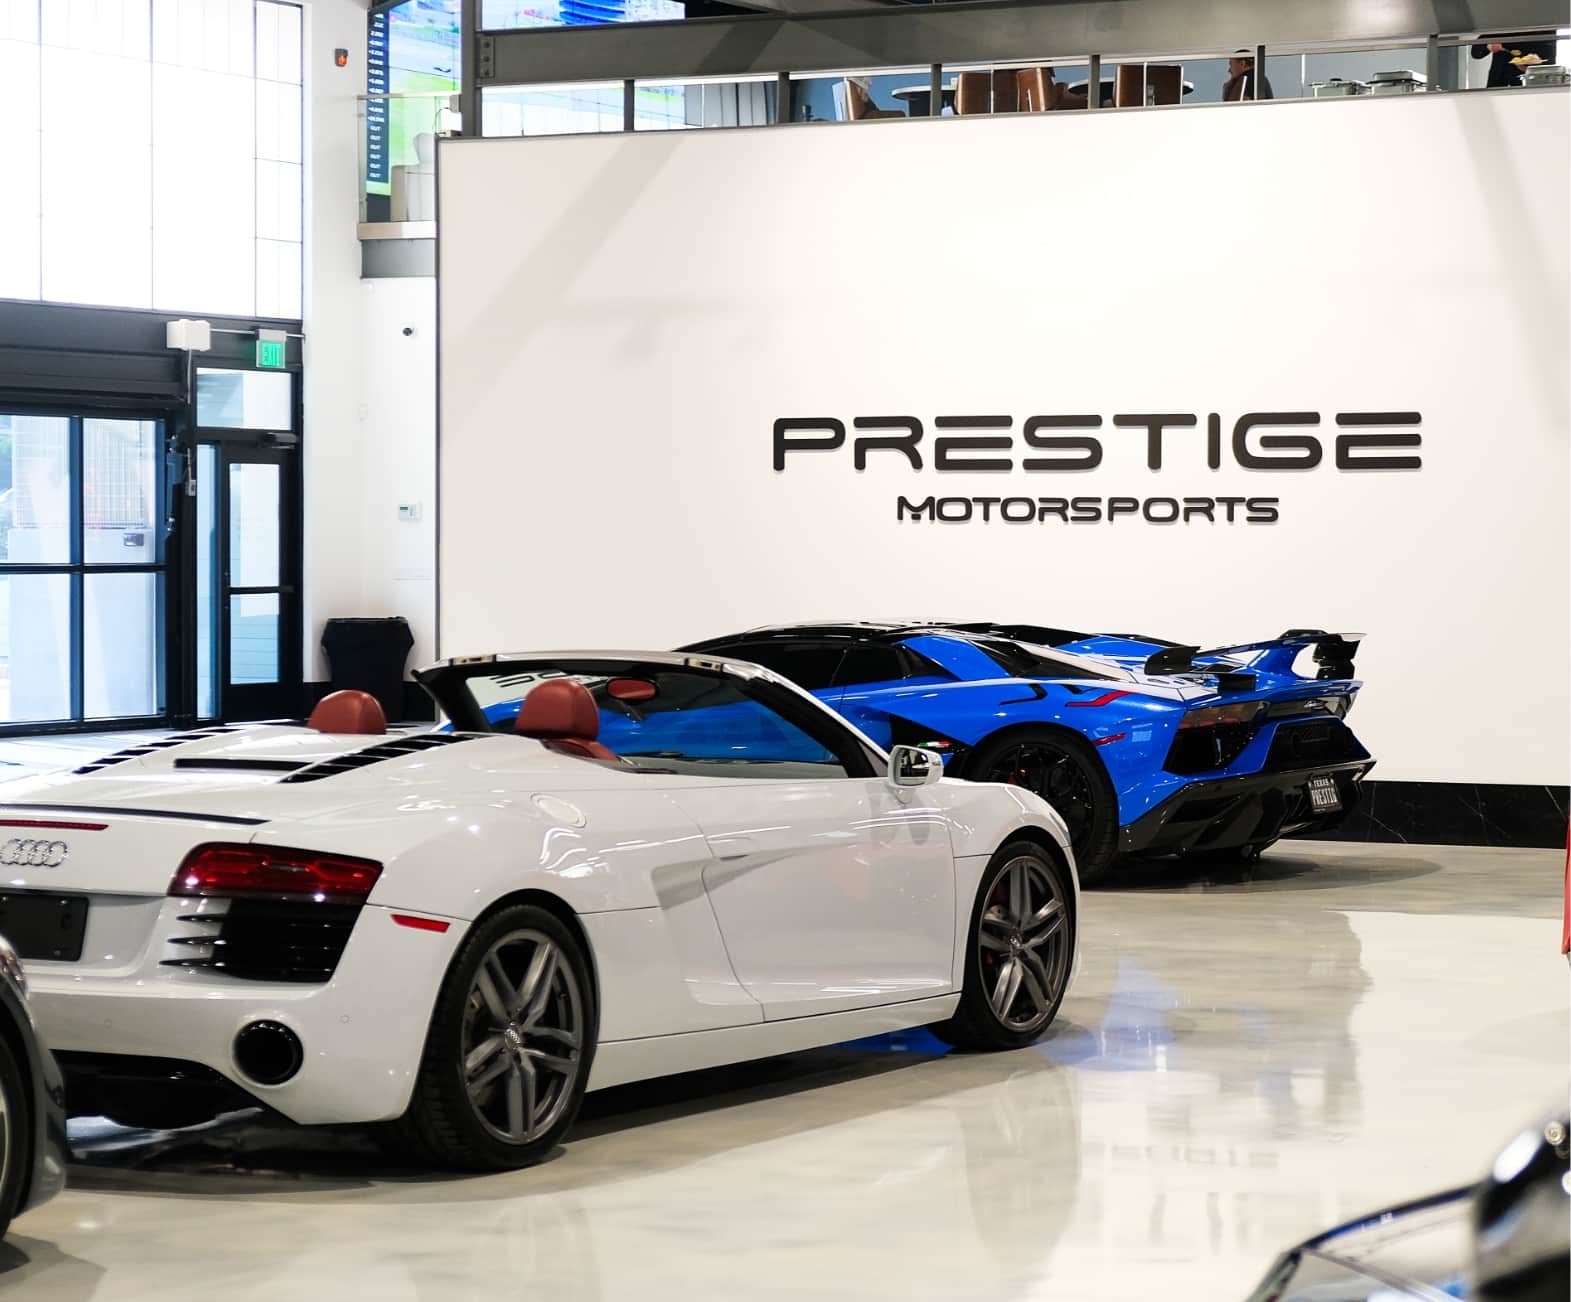 Prestige Motorsports Masthead